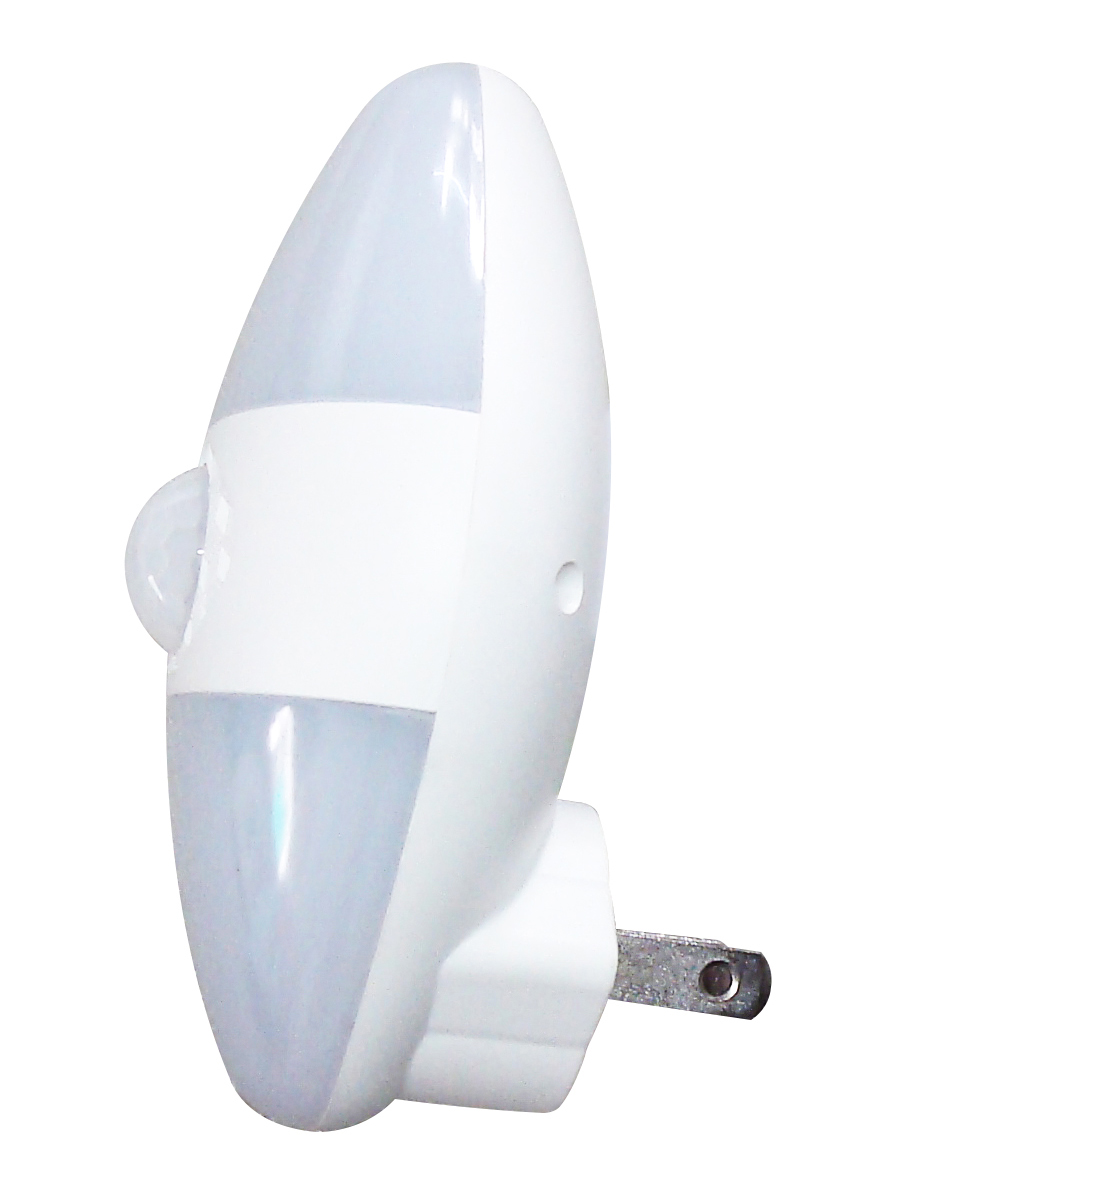 XS-009-US-Plug-2W-110V220V-Infrared-Human-Body-Induction-Lamp-Plug-in-PIR-Motion-Sensor-Night-Light-1794781-1